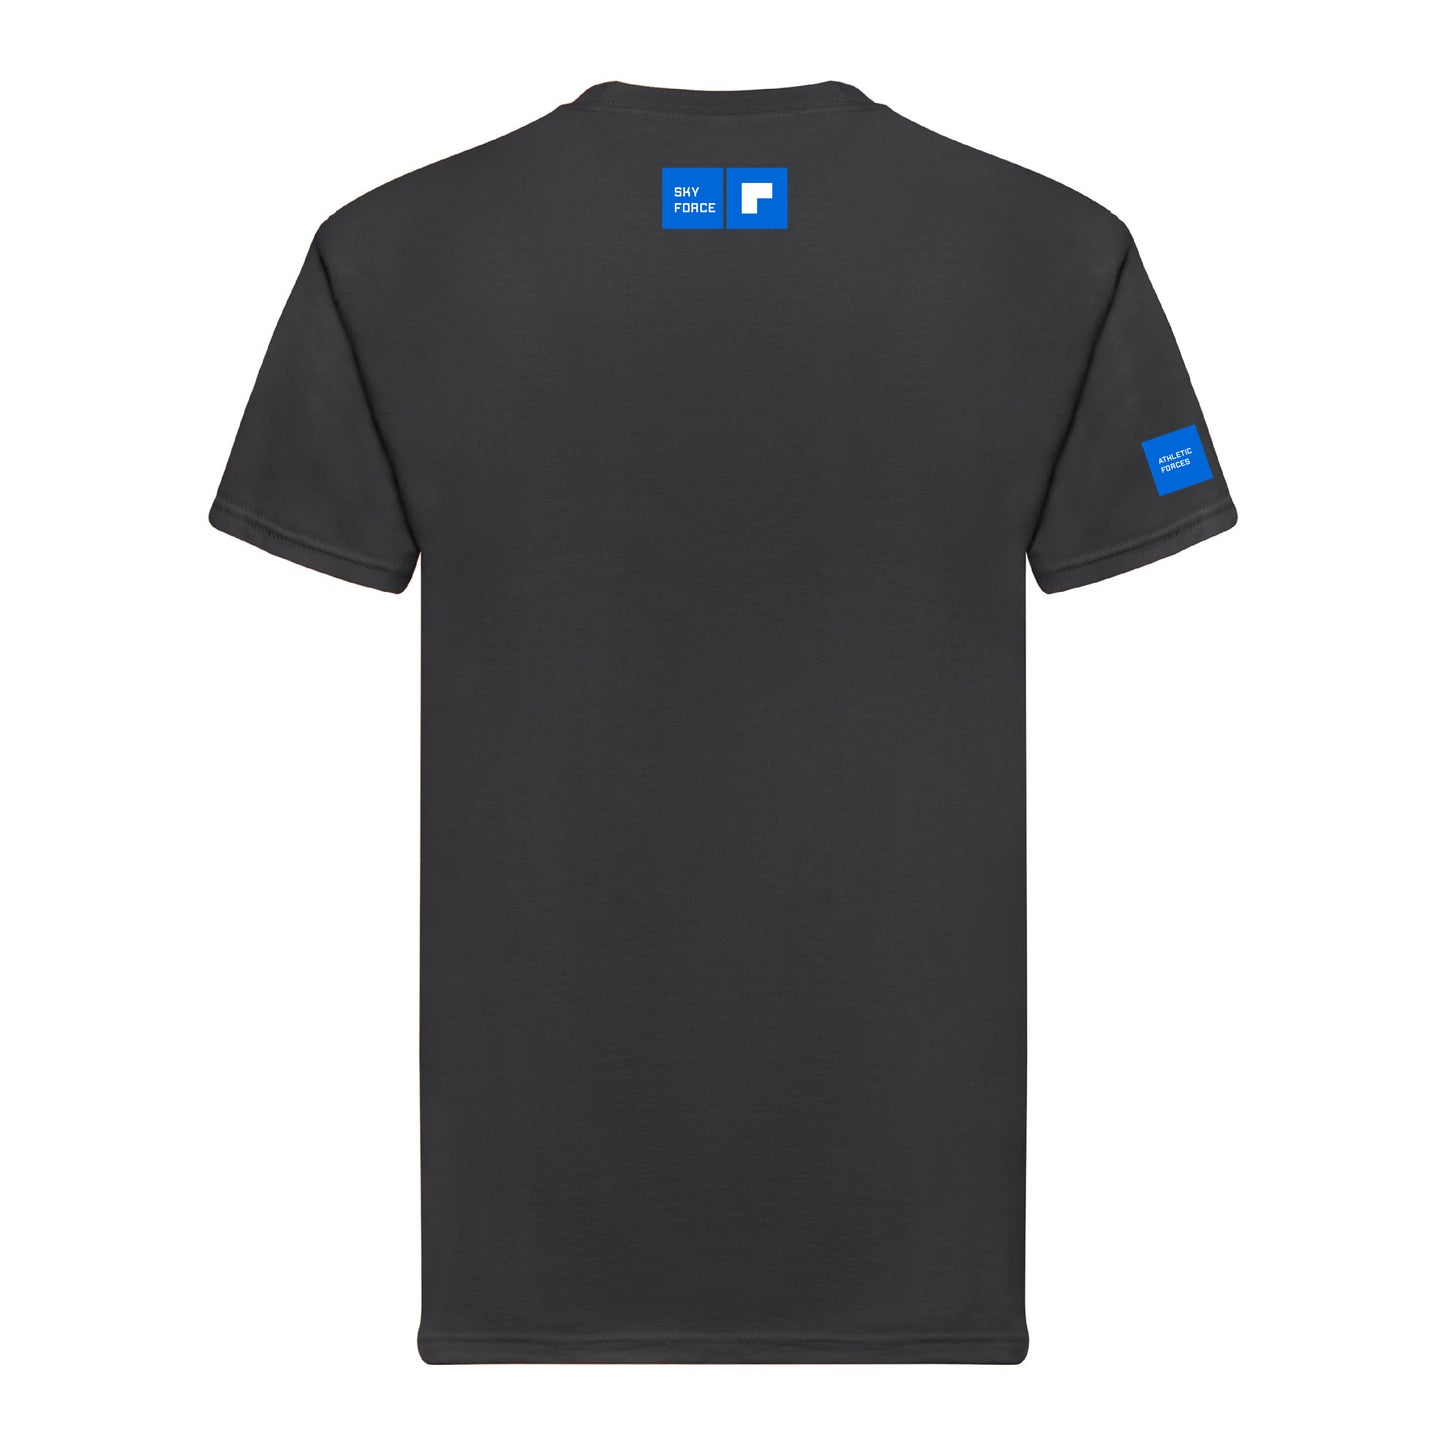 Sky Force™ Troposphere T-Shirt